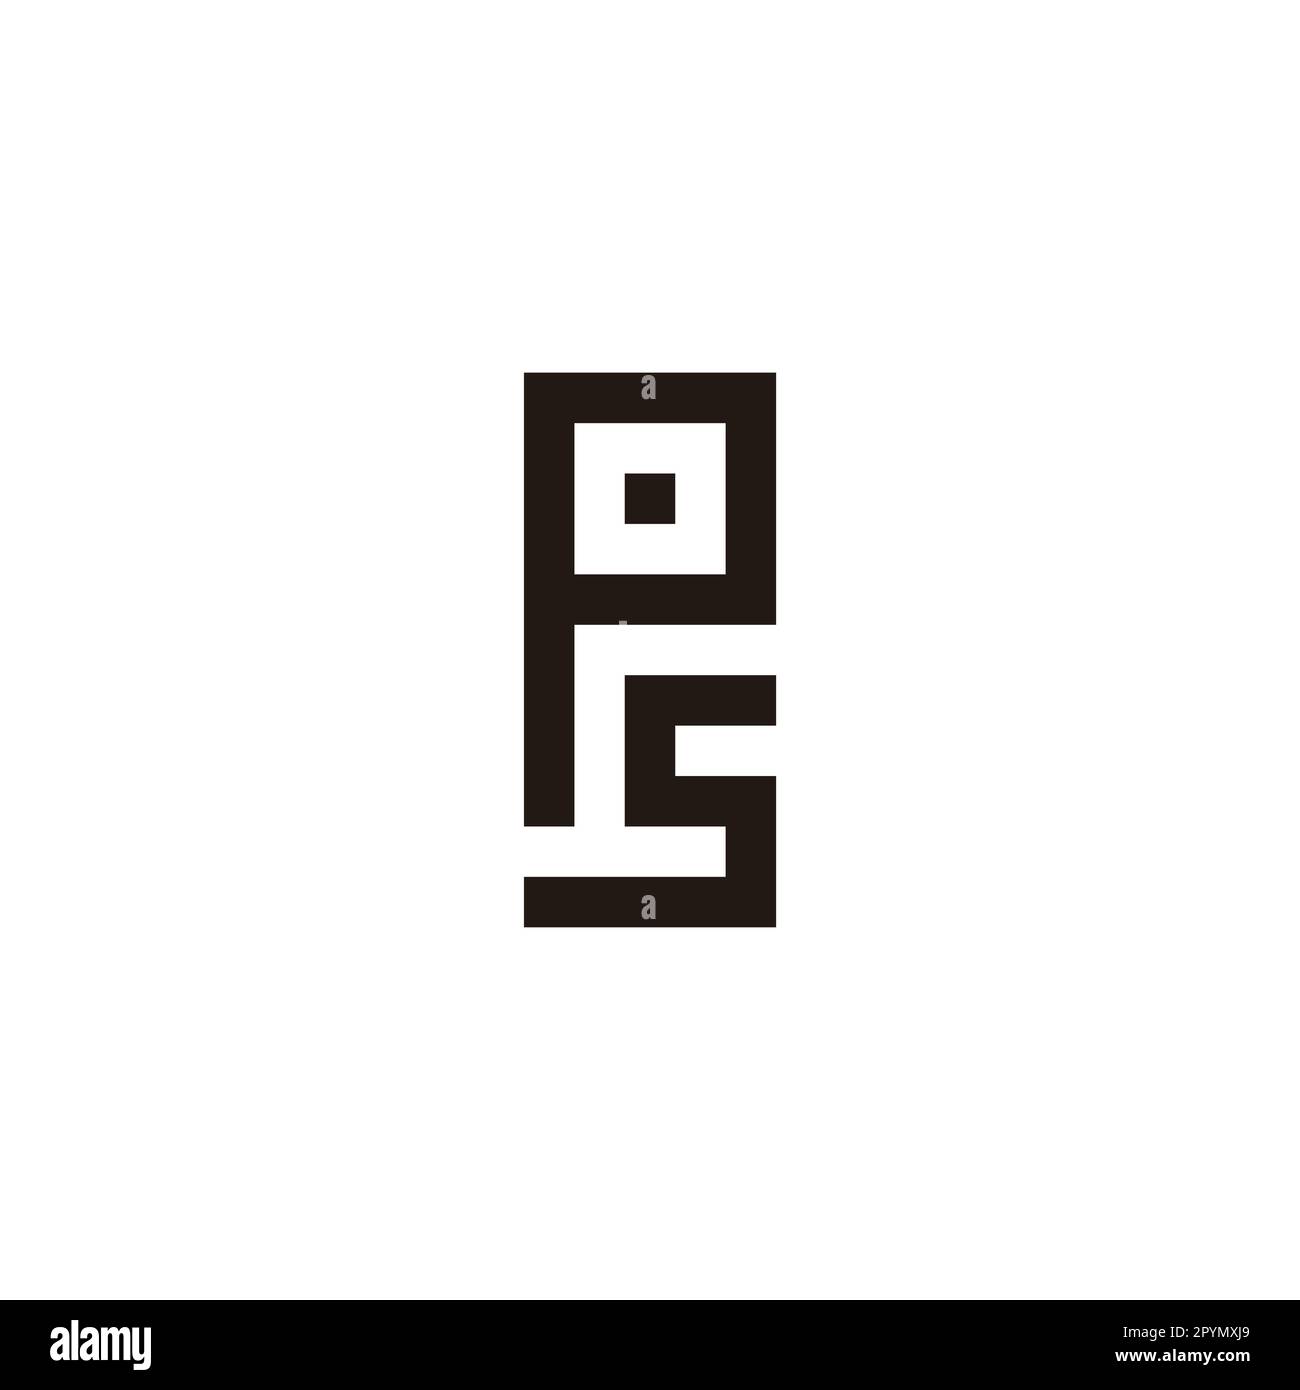 Letter Ps square geometric symbol simple logo vector Stock Vector